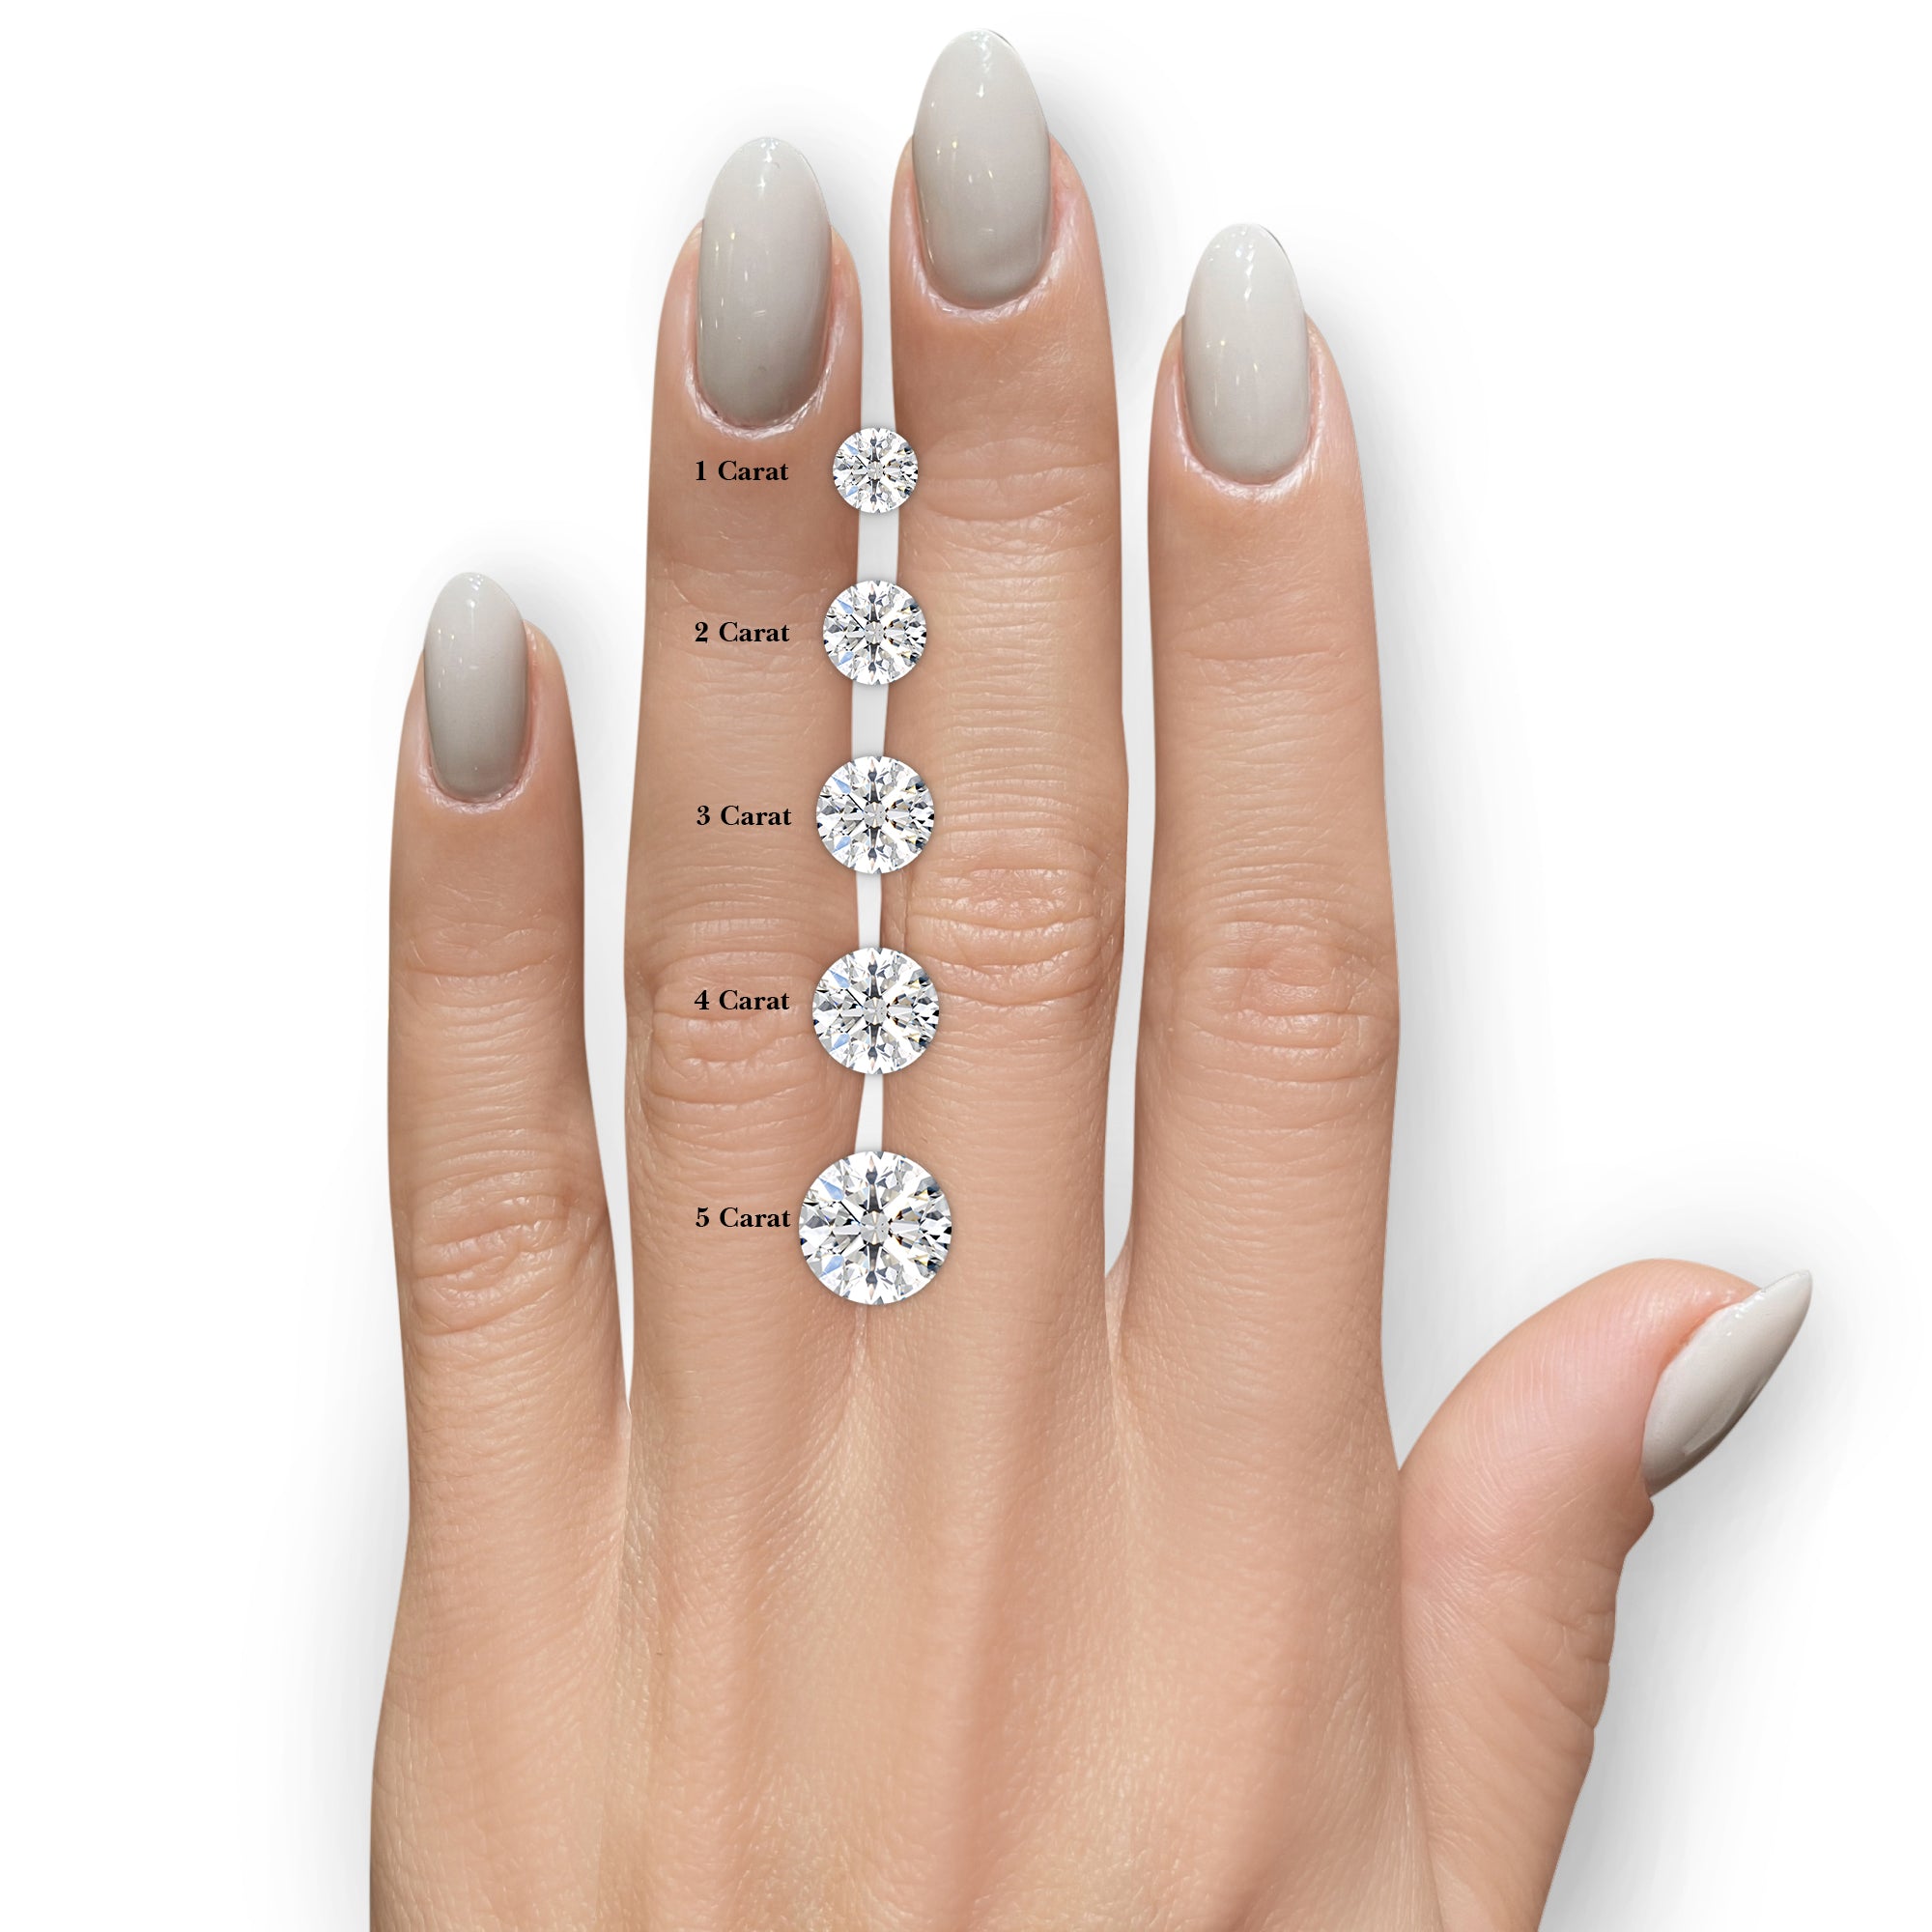 Valeria Lab Grown Diamond Ring -14K White Gold